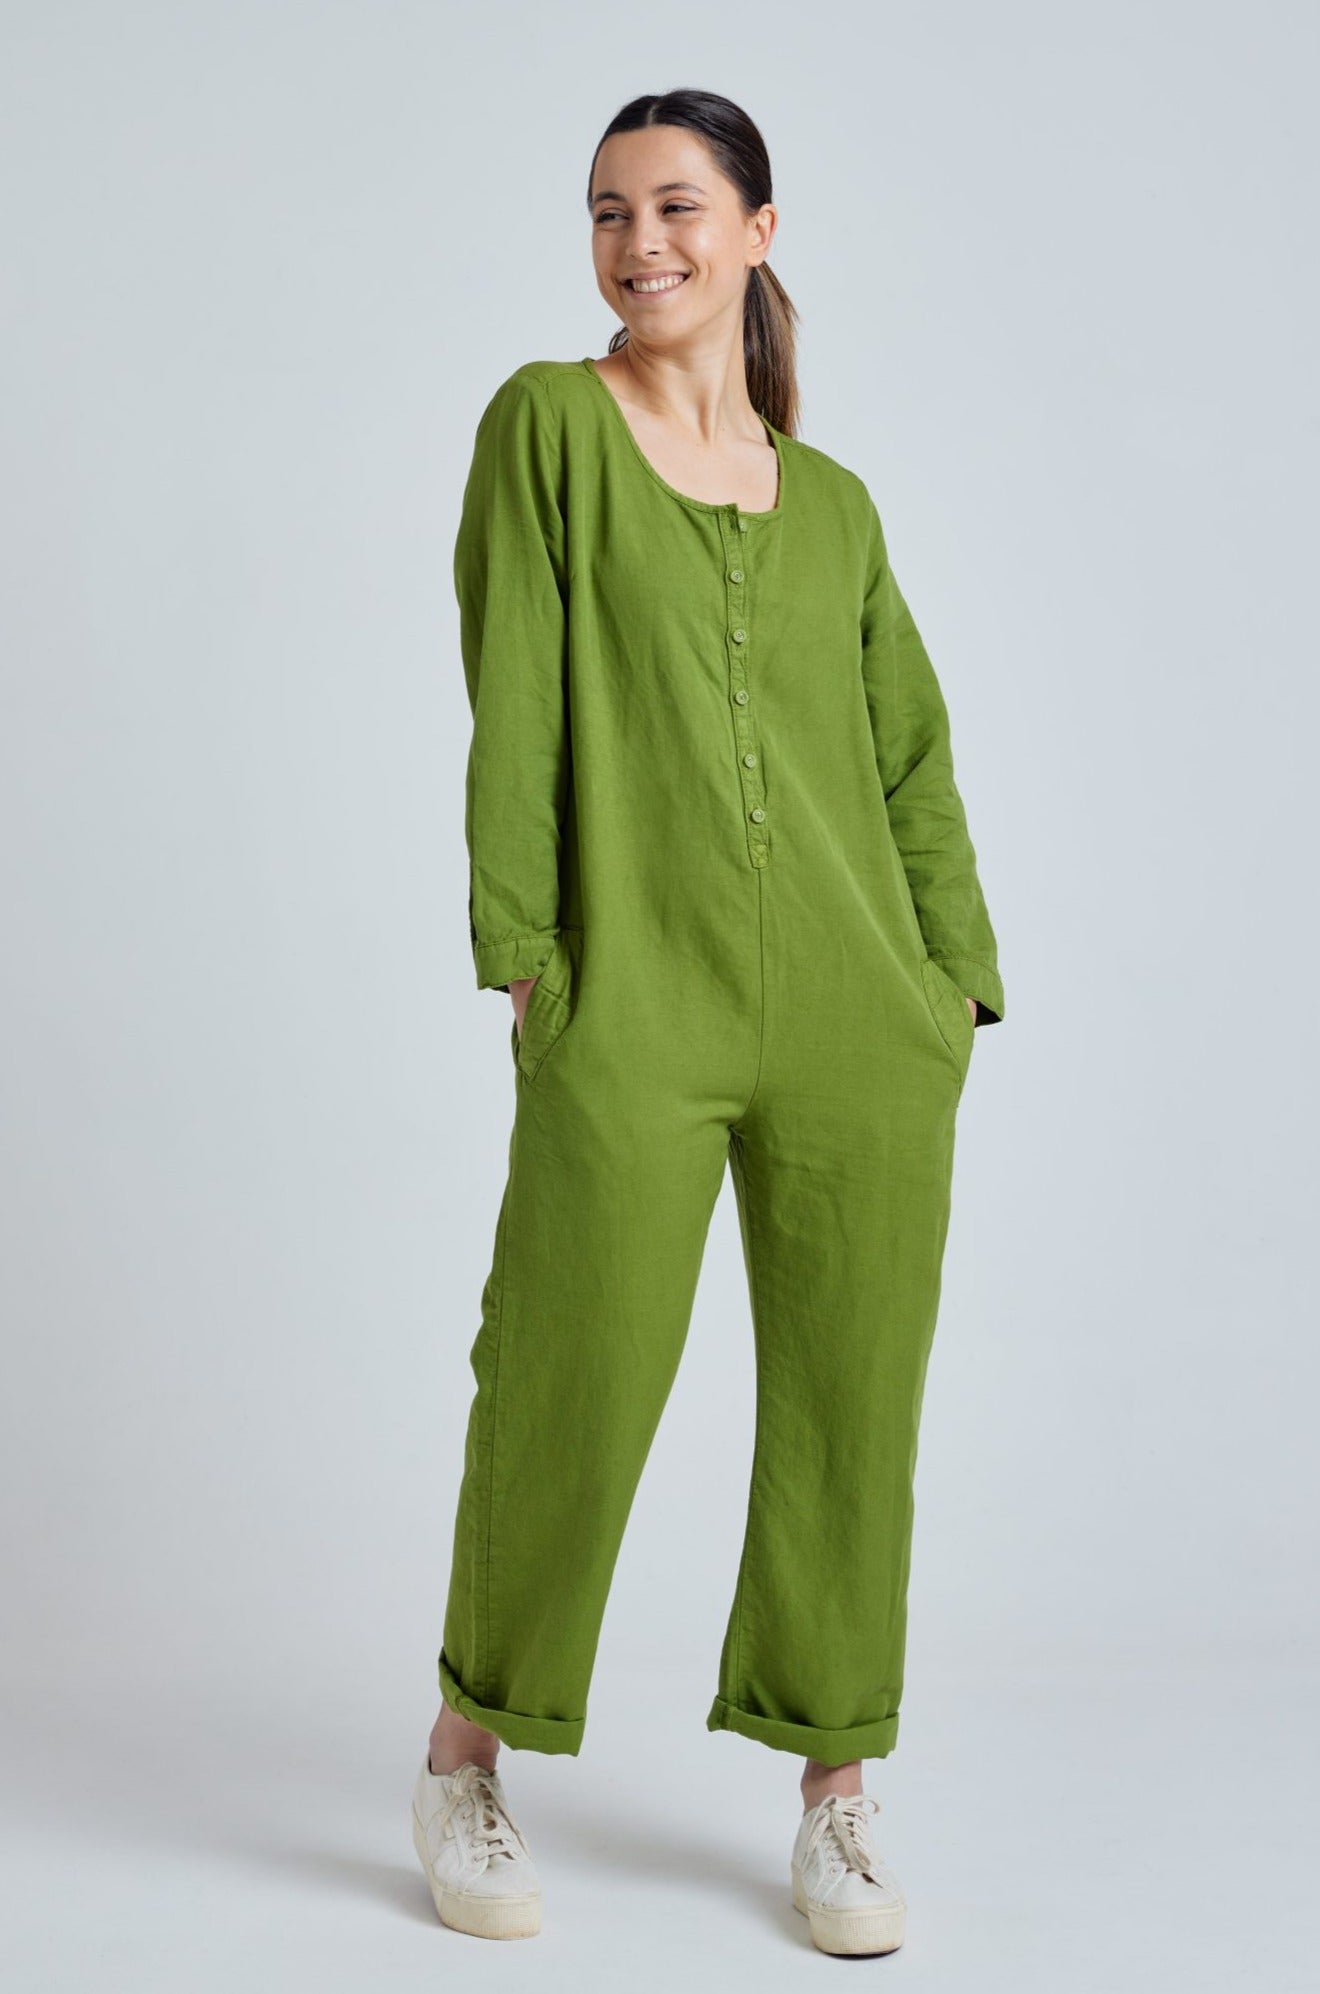 CLARA spring Green - GOTS Organic Cotton Jumpsuit by Flax & Loom, XL